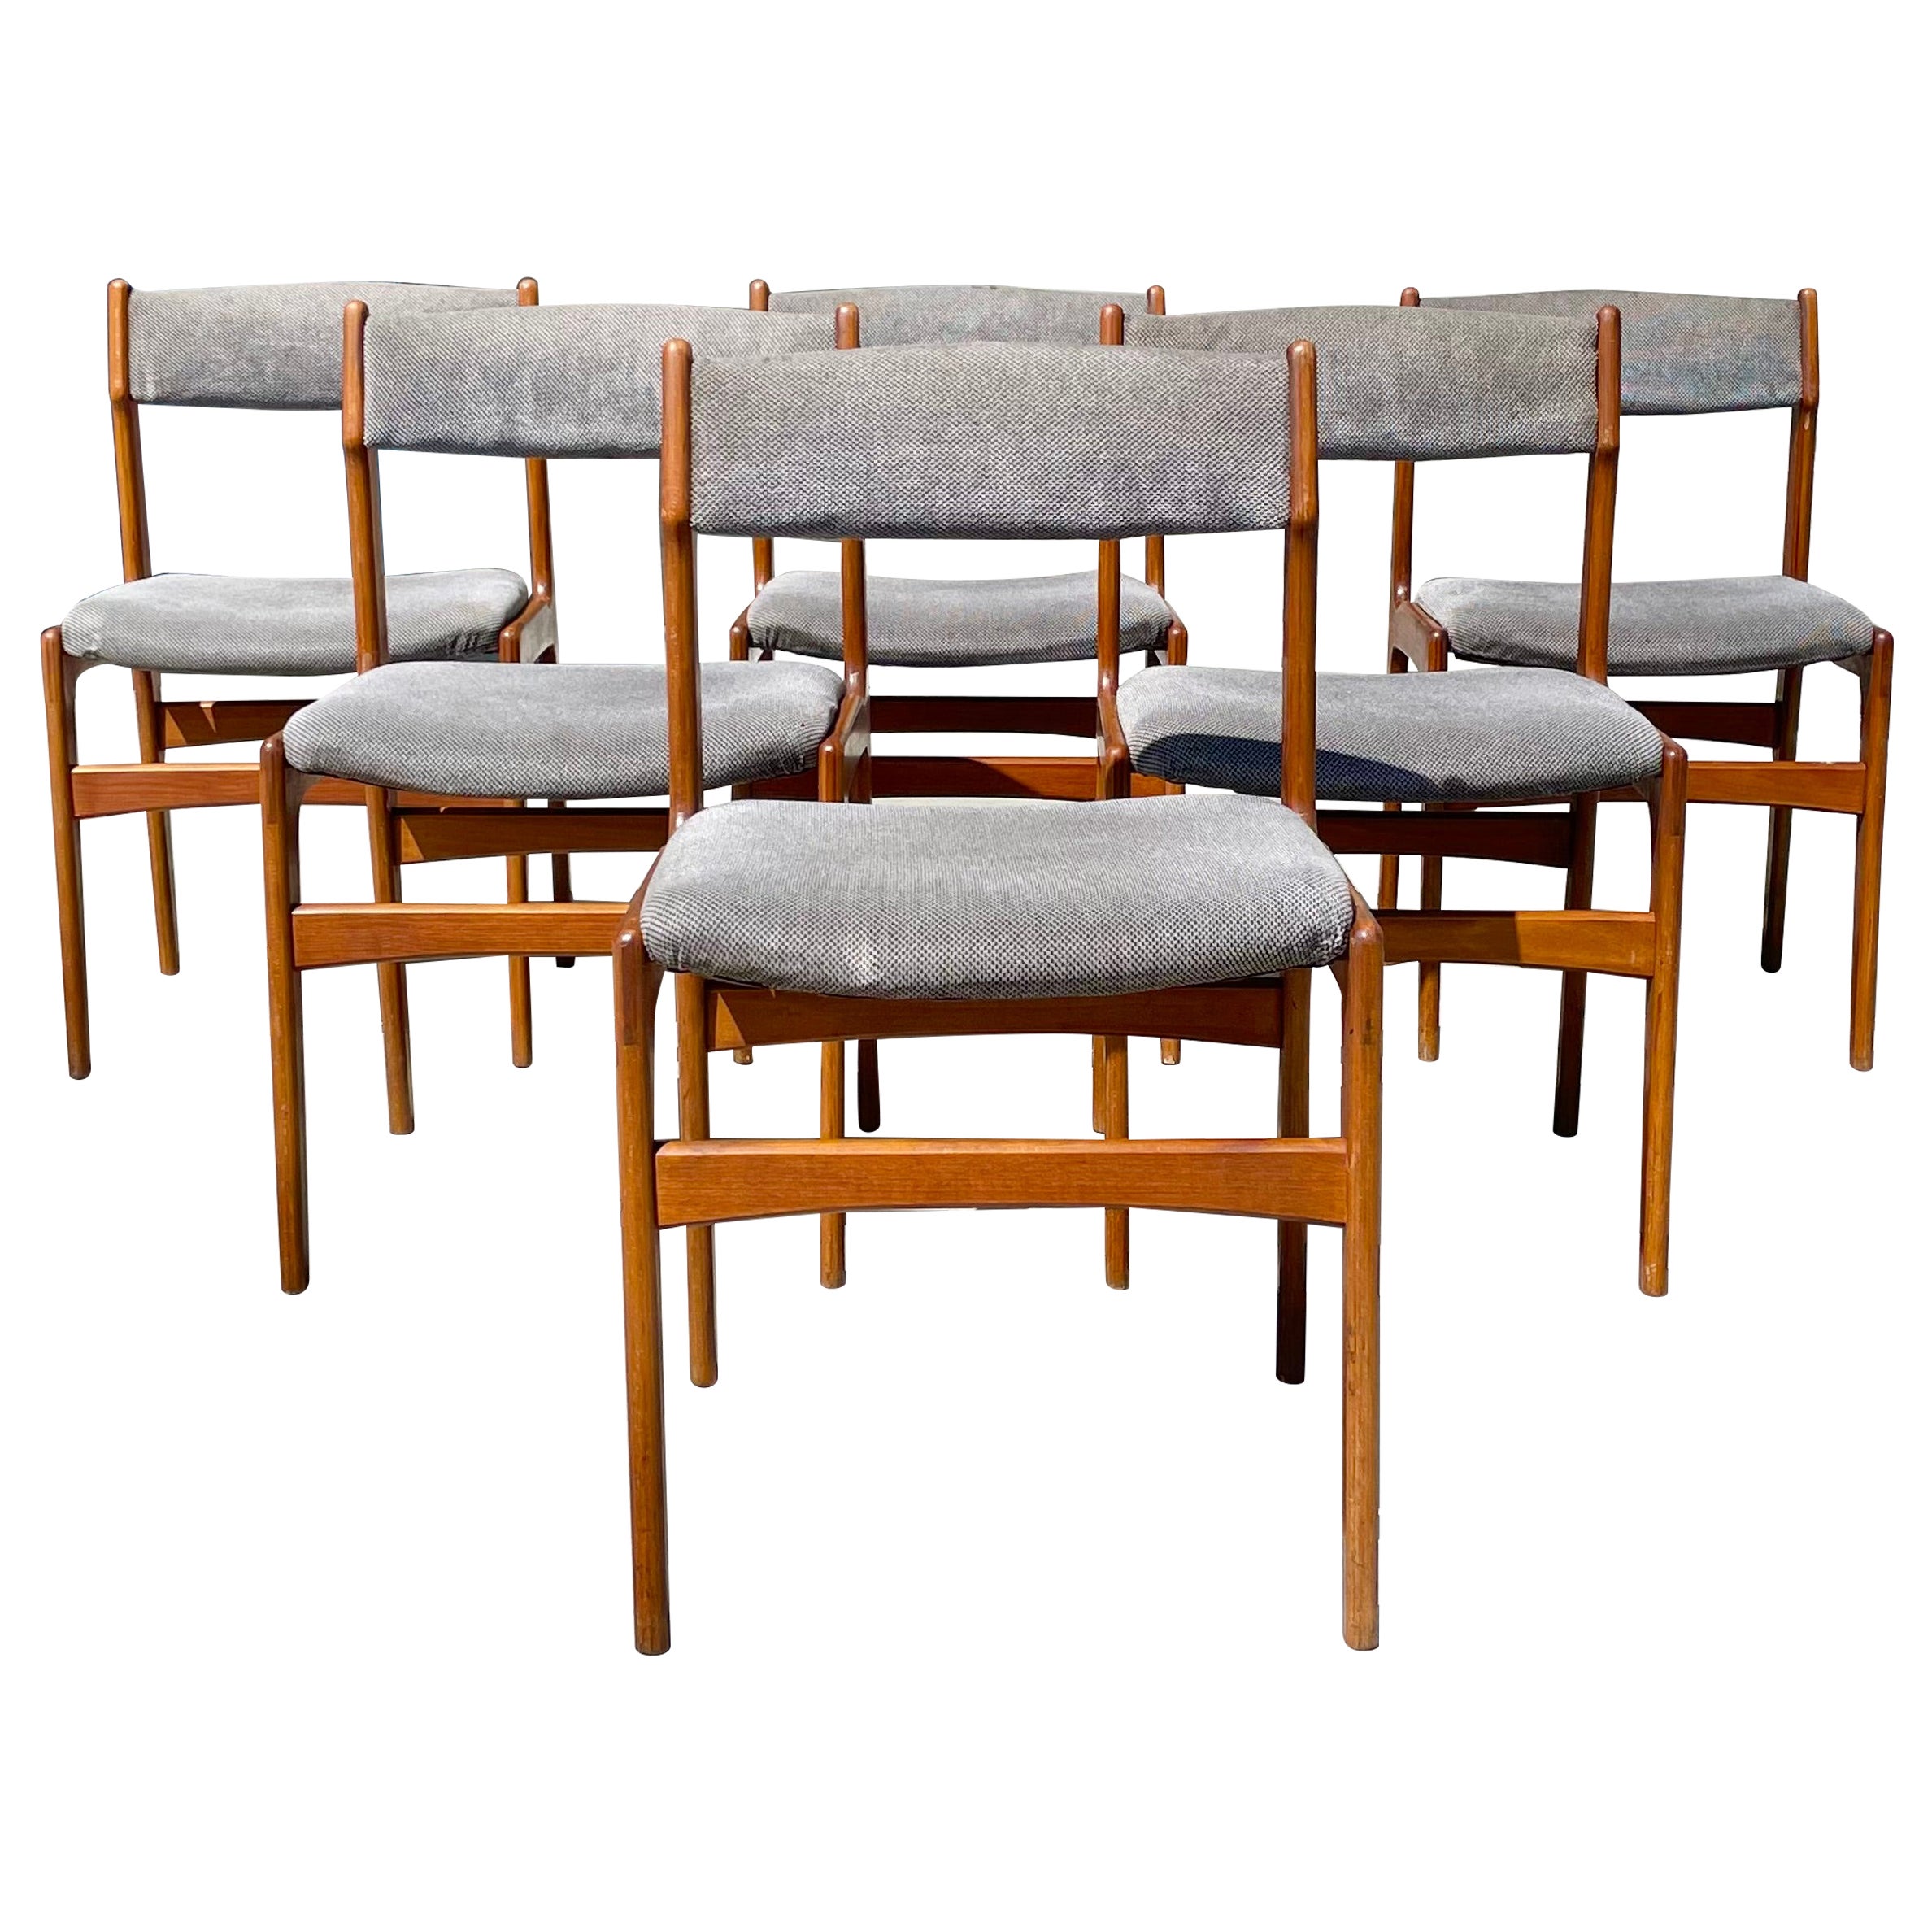 1960s Danish Modern Teak Dining Chairs - Set of 6